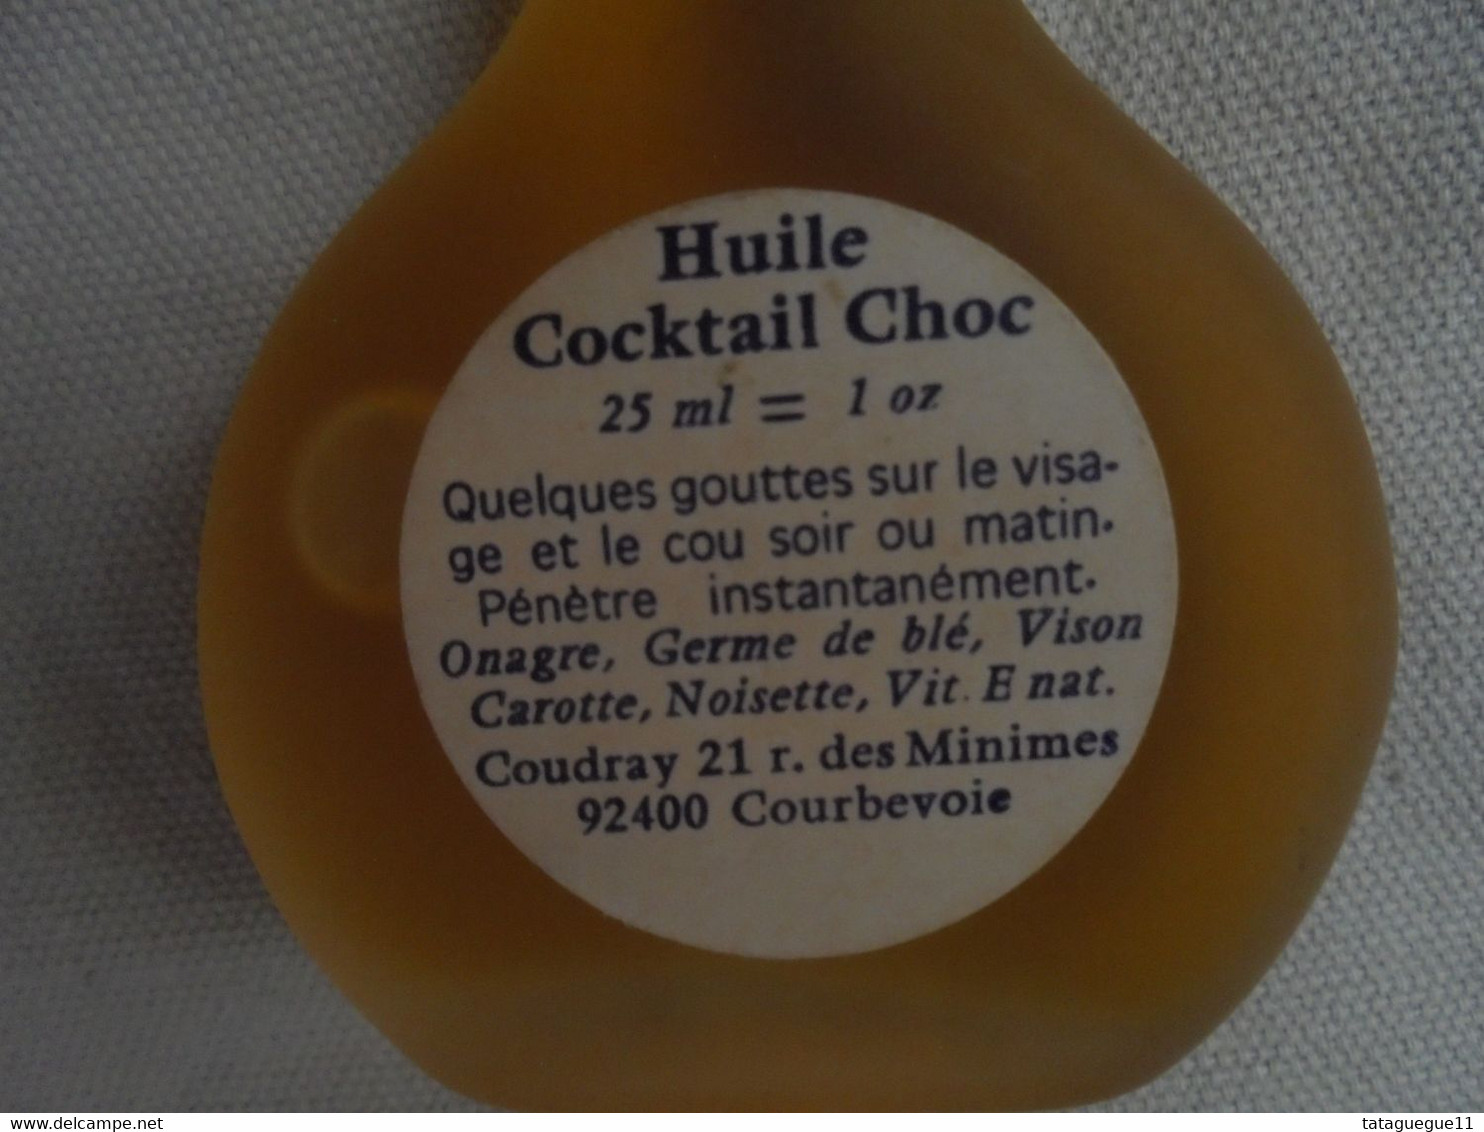 Ancien- Flacon Coudray Paris Huile Cocktail Choc 25 Ml (Plein) - Productos De Belleza